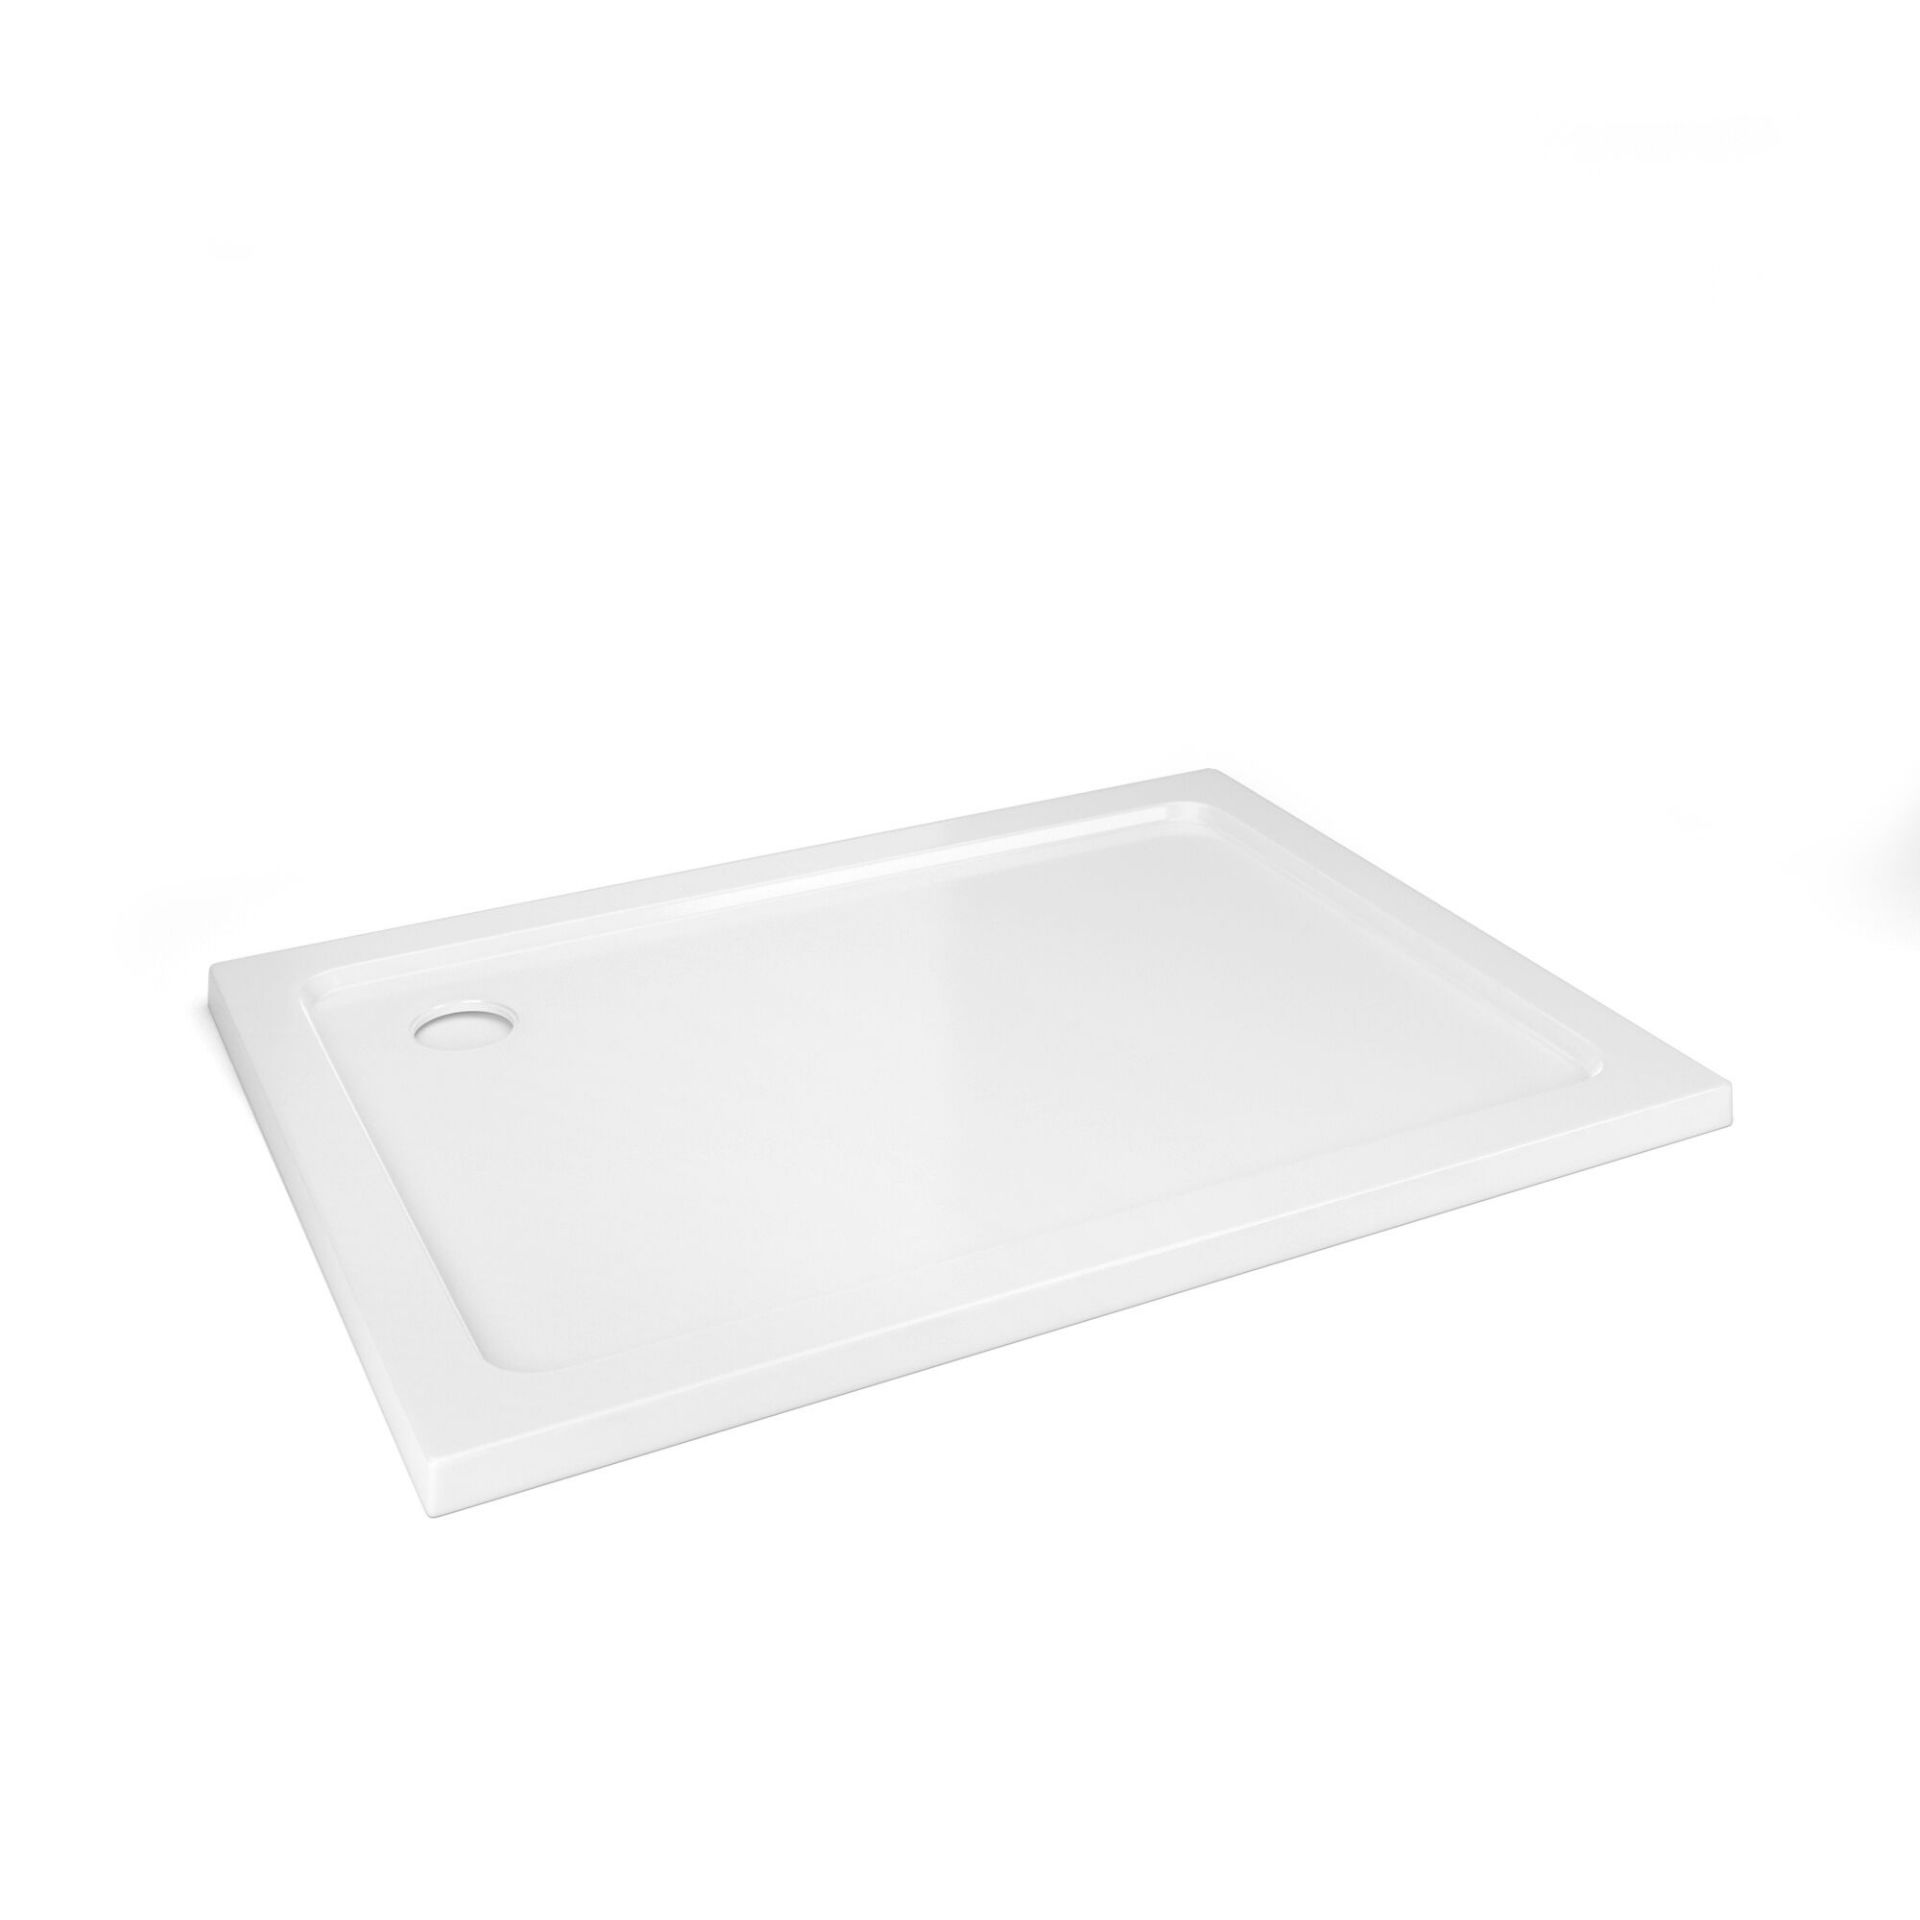 (Z245) 1100x800mm Rectangular Ultra Slim Stone Shower Tray. Low profile ultra slim design Gel ... - Image 2 of 2